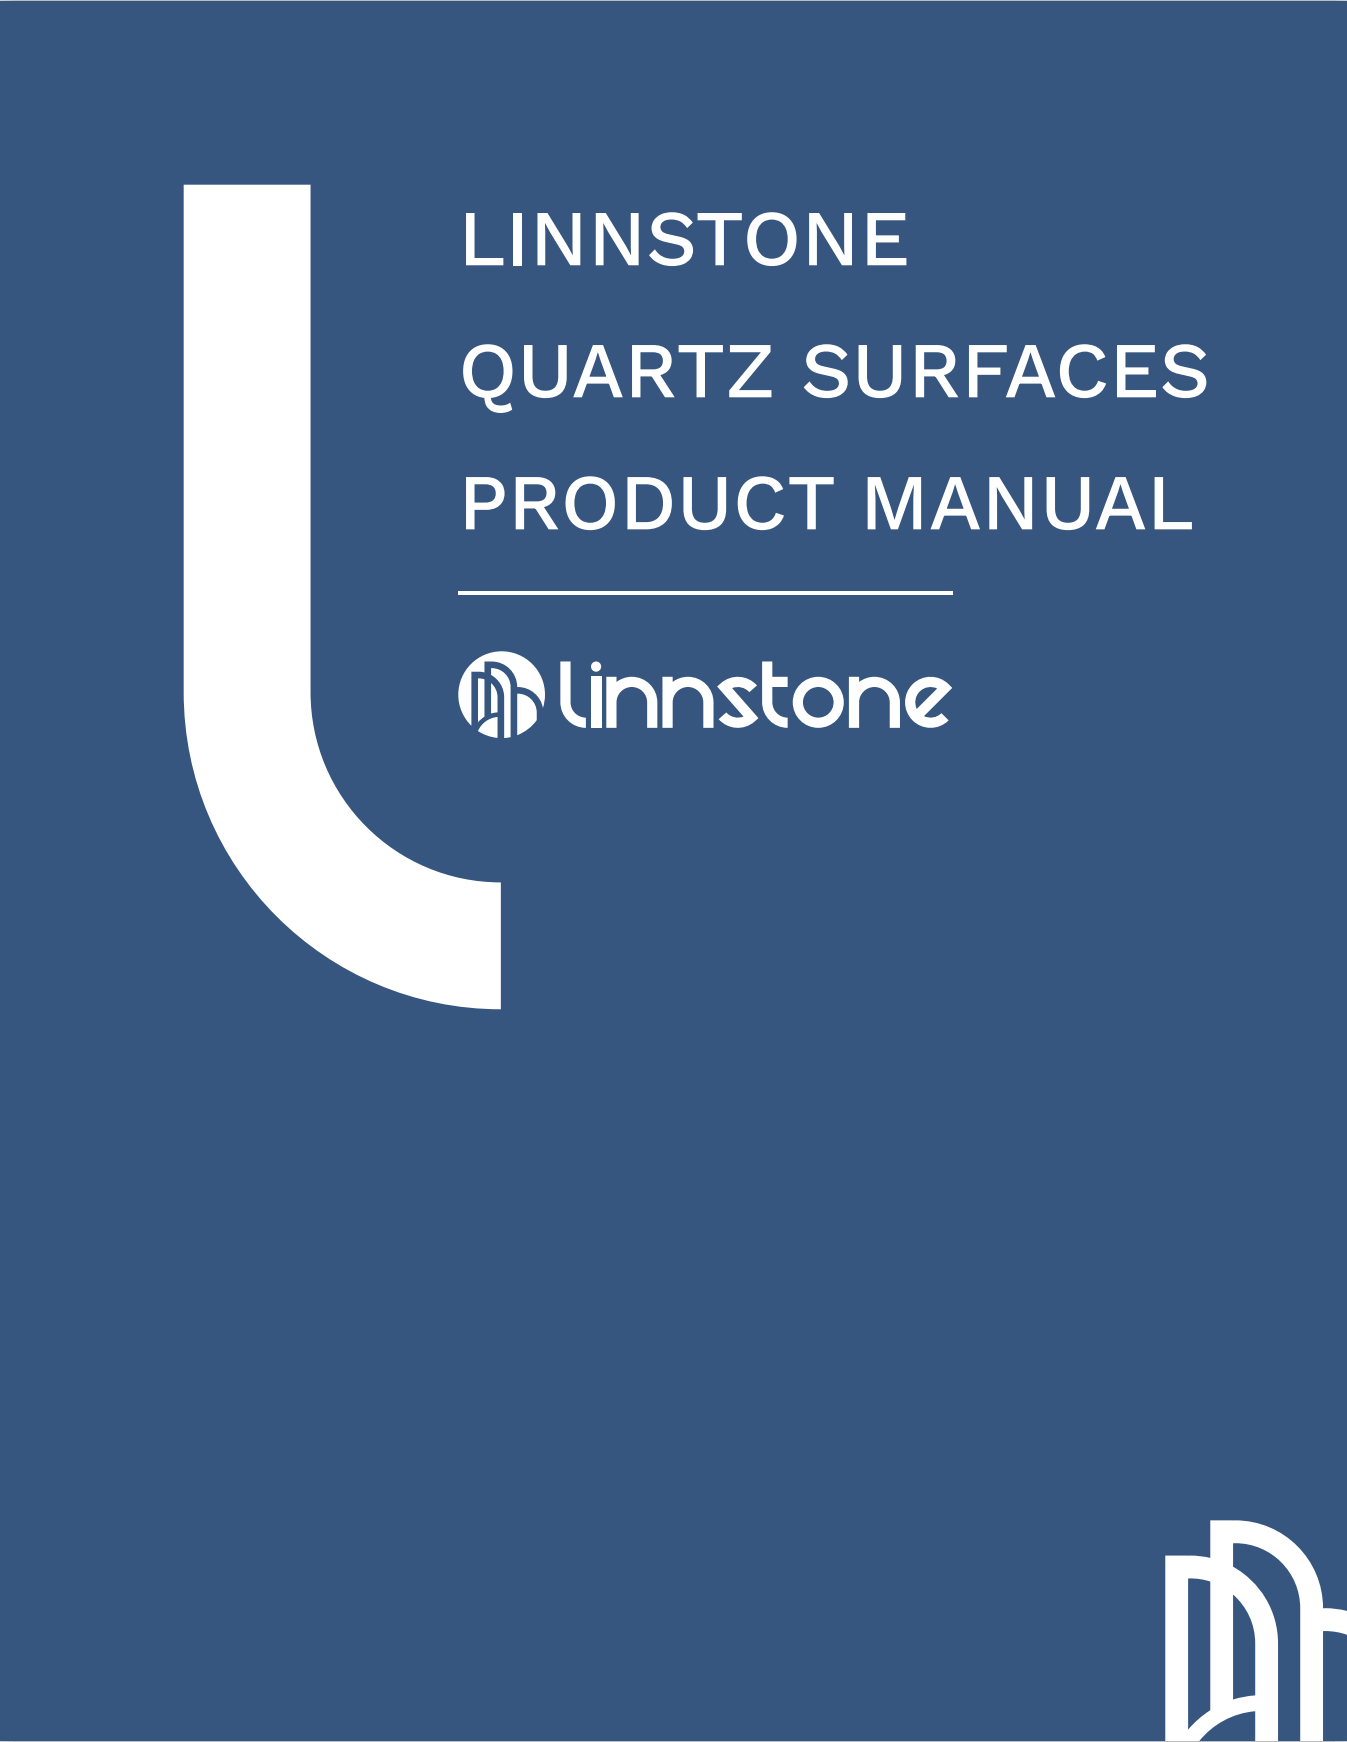 Linnstone Quartz Surfaces Product Manual Cover